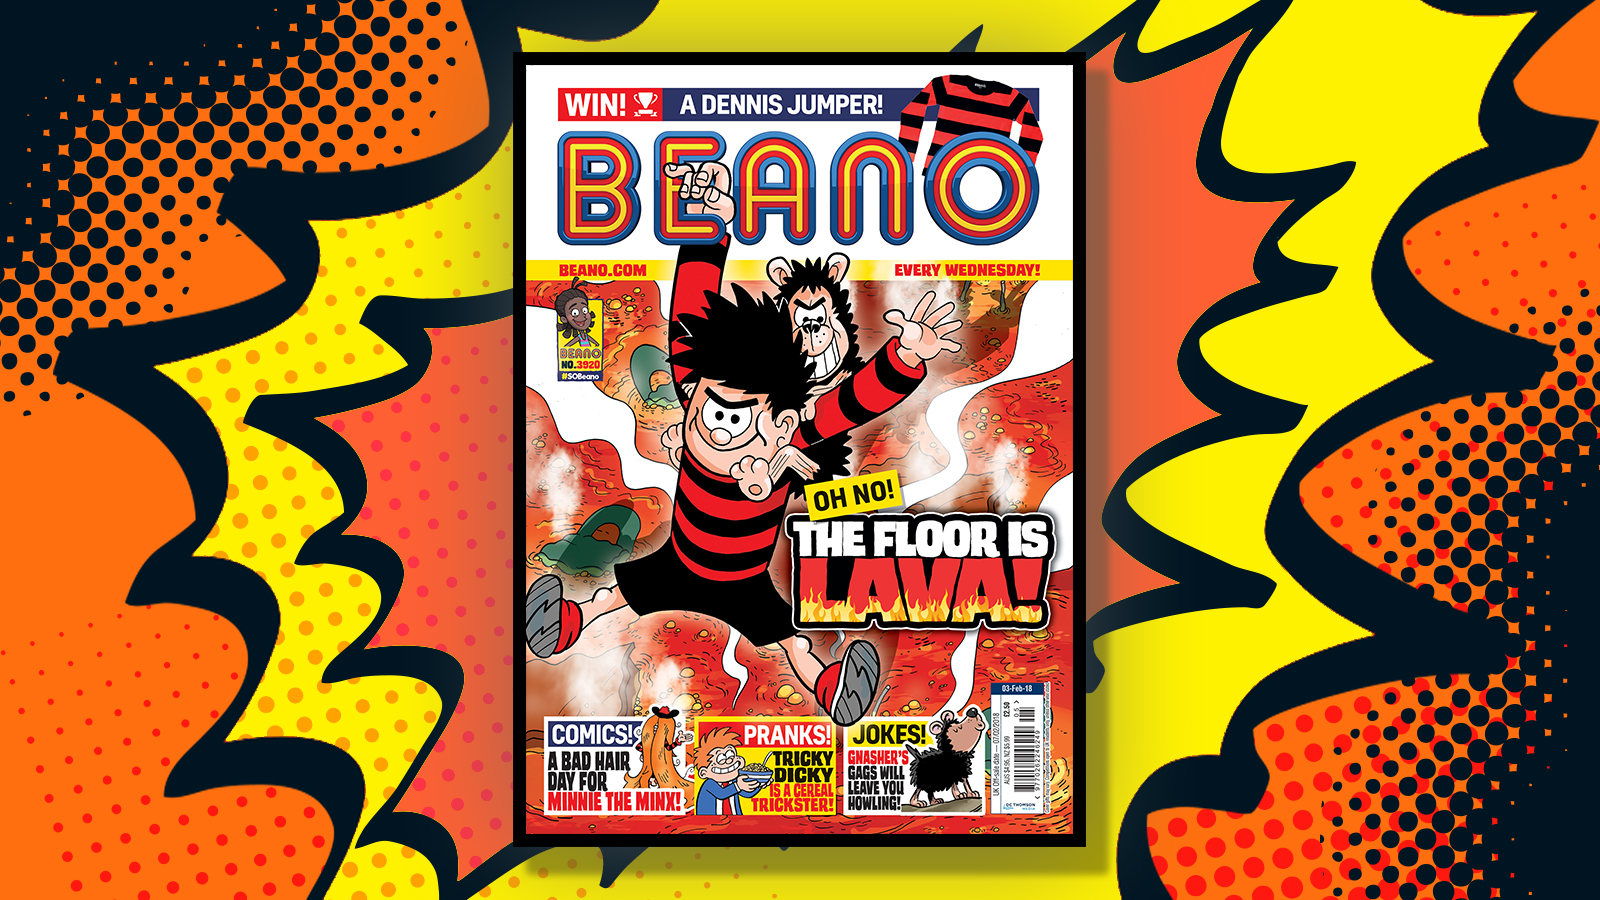 Inside Beano 3920 - The Floor is Laval